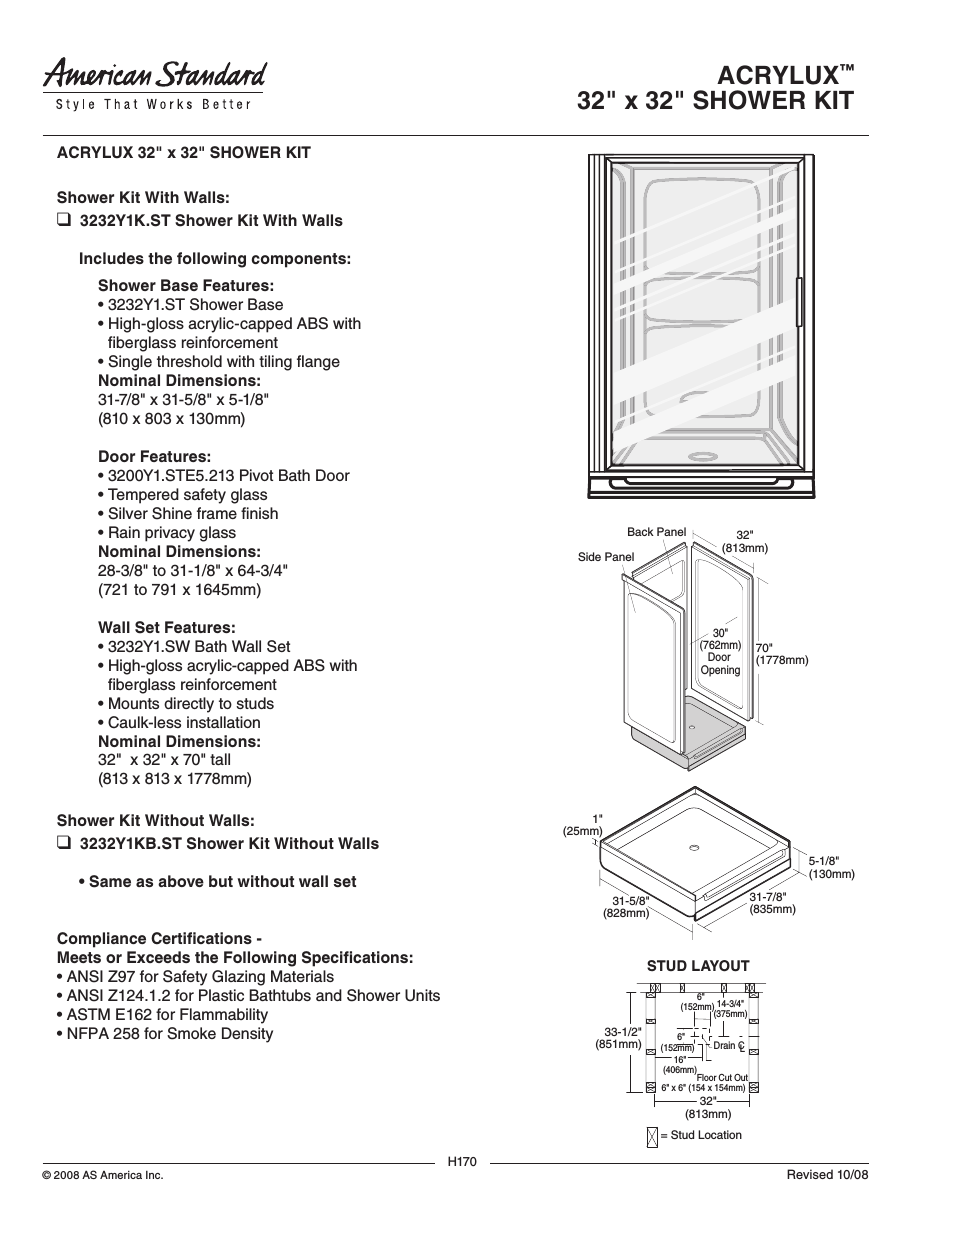 Acrylux Shower Kit 3232Y1KB.ST